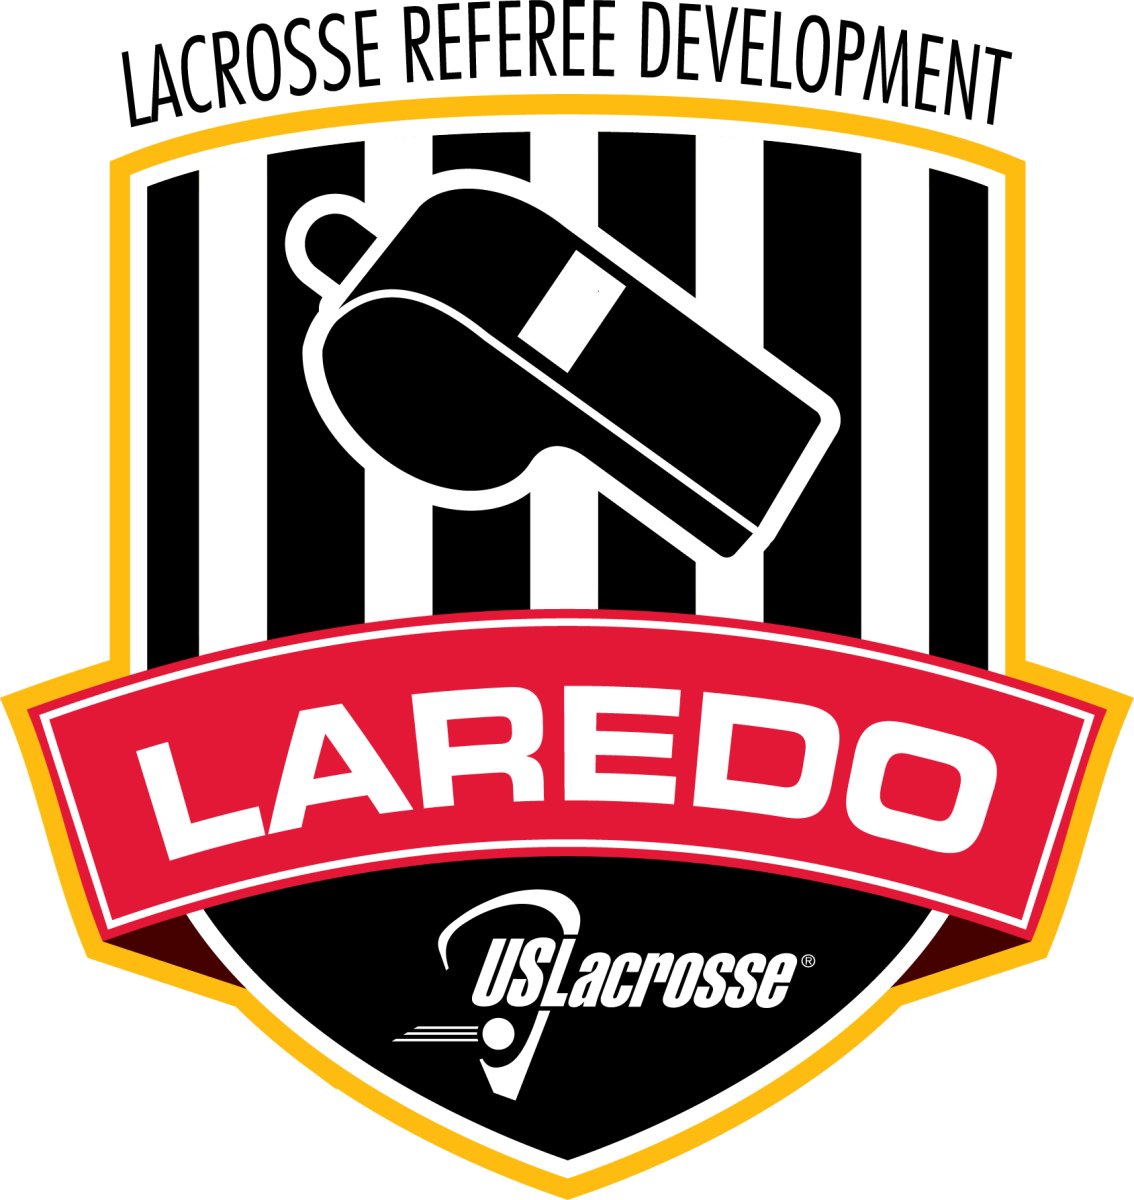 Permalink to: 2022 USA Lacrosse LAREDO Clinics